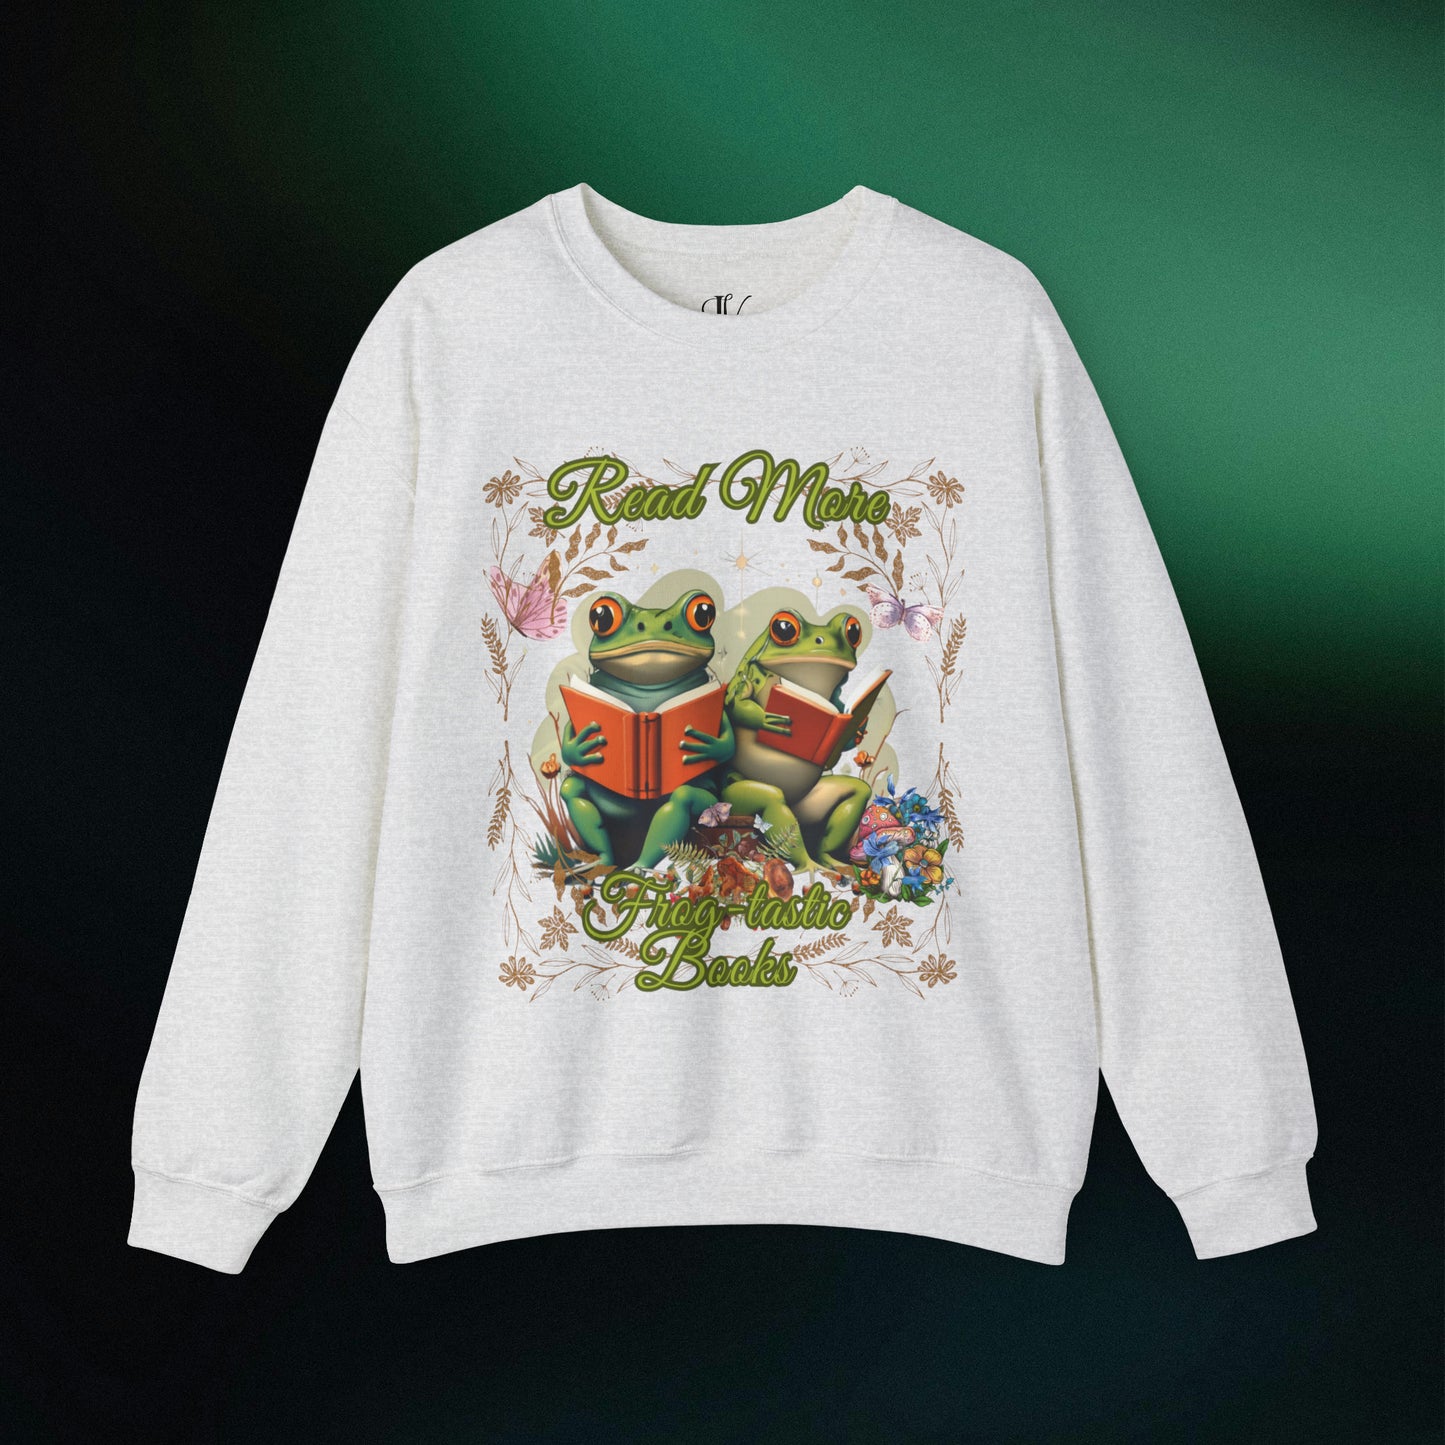 Frog Bookworm Sweatshirt | Read More Books Shirt | Aesthetic, Vintage Frog Sweatshirt Sweatshirt S Ash 